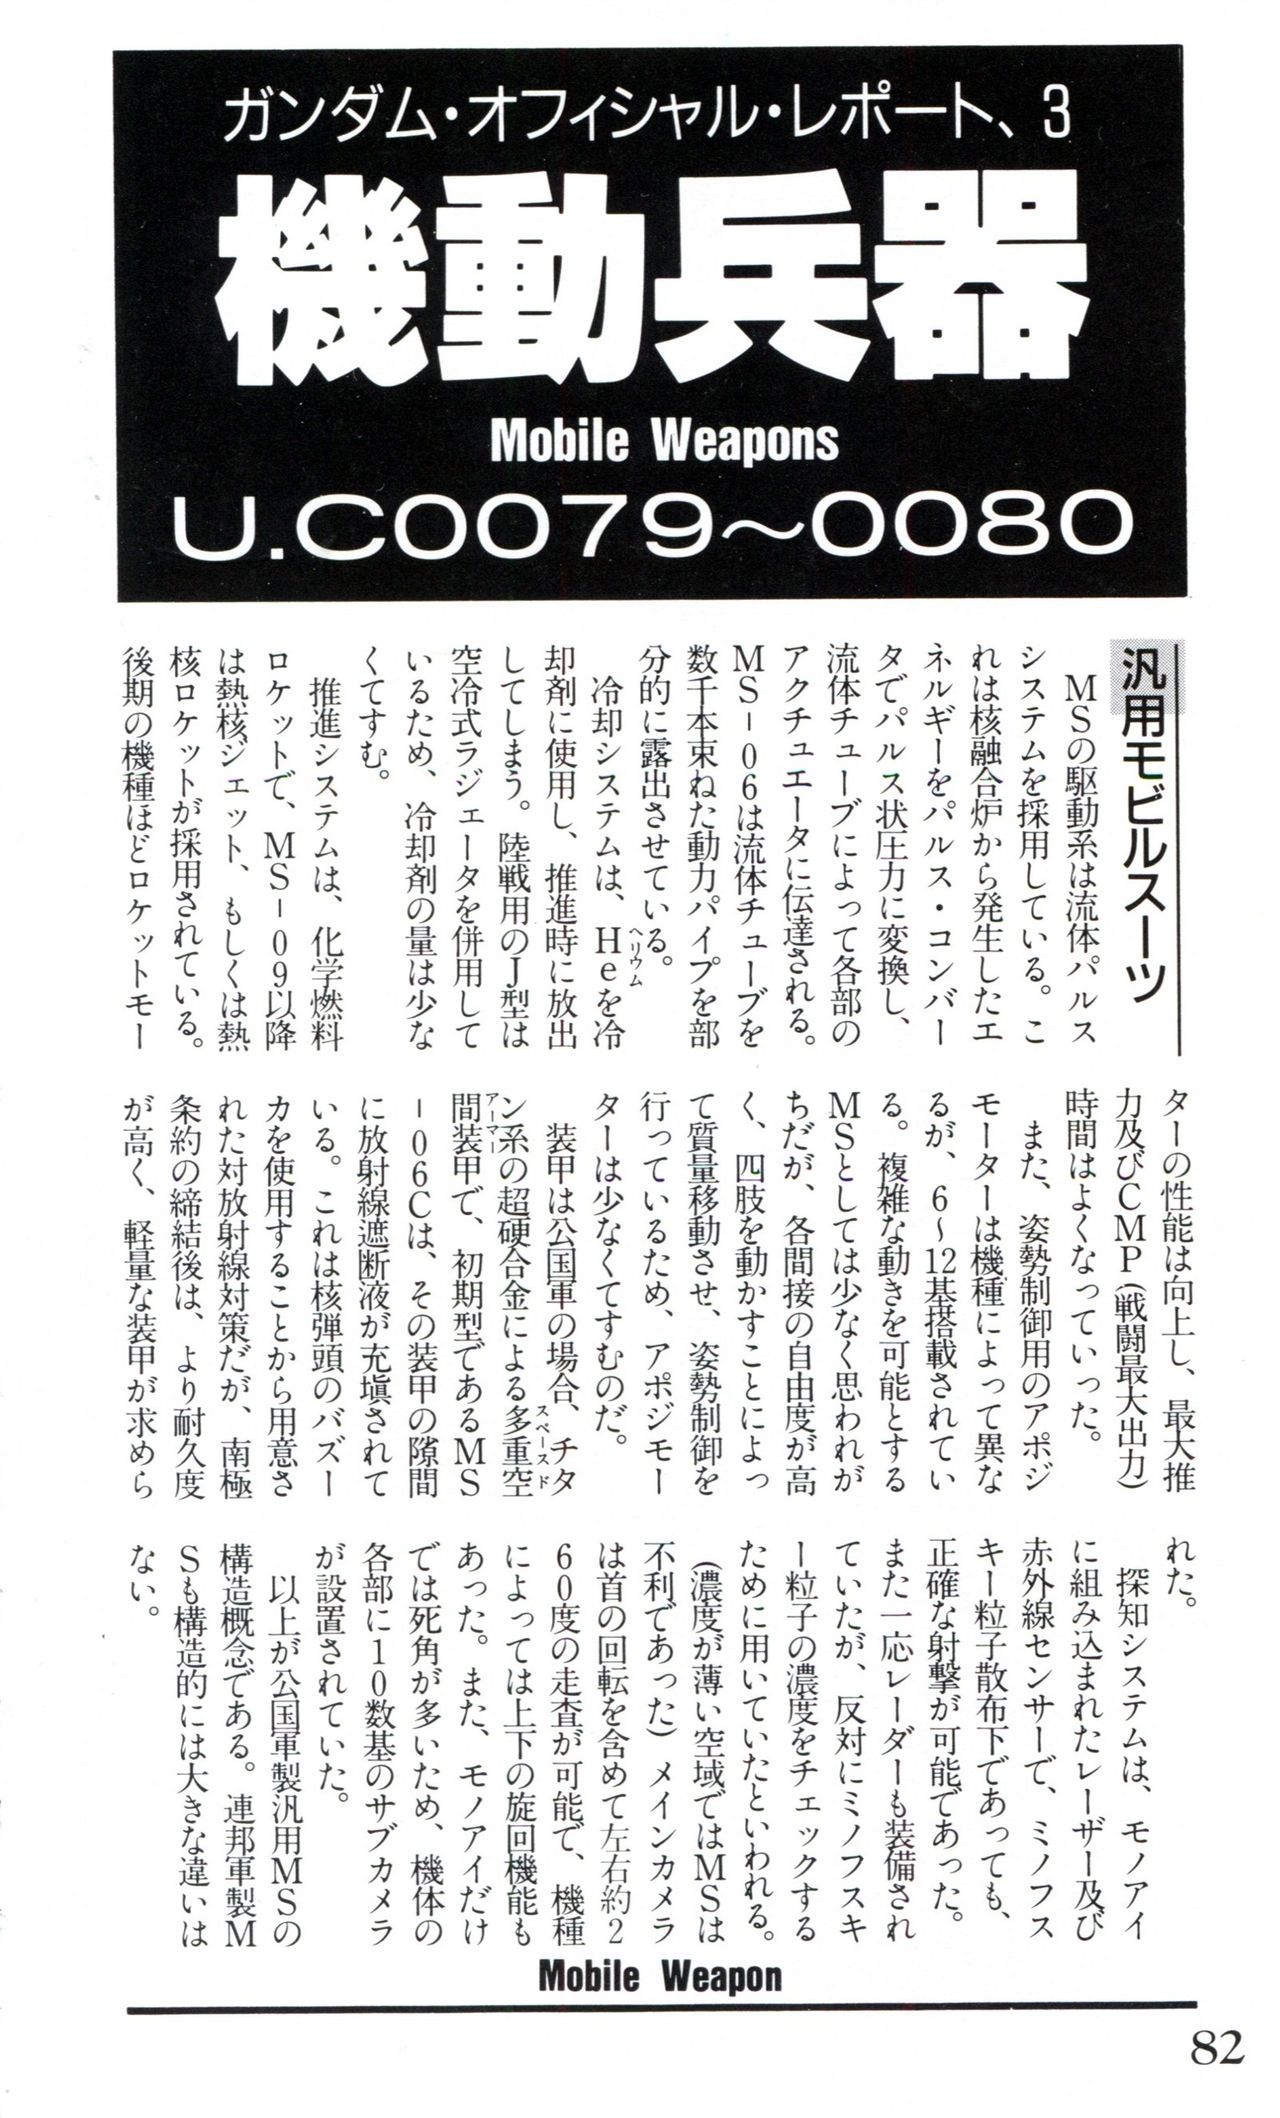 Mobile Suit Gundam U.C. Box MS Gundam Encyclopedia NO.01 - Mobile Suit Gundam 81